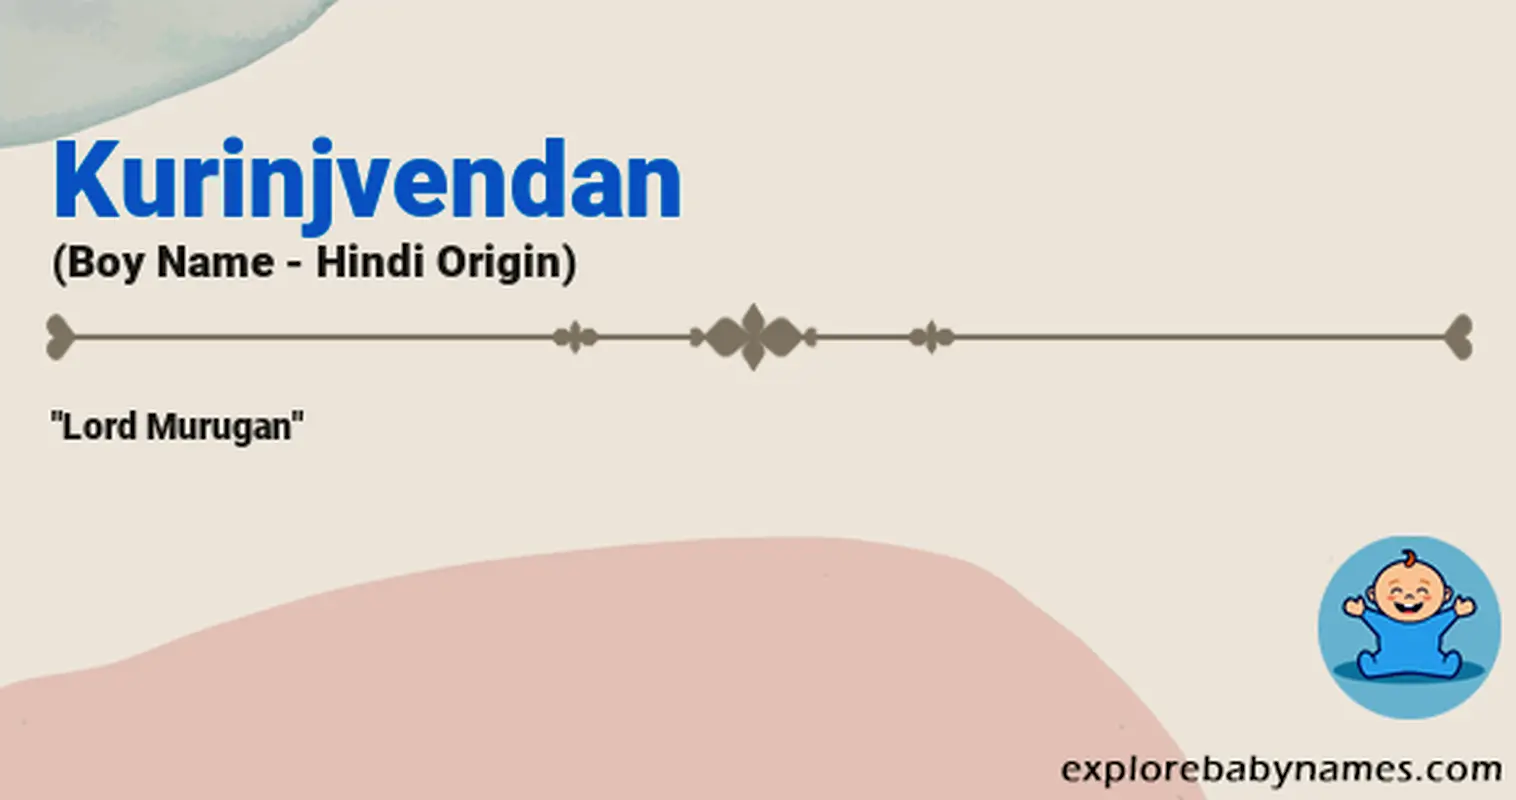 Meaning of Kurinjvendan